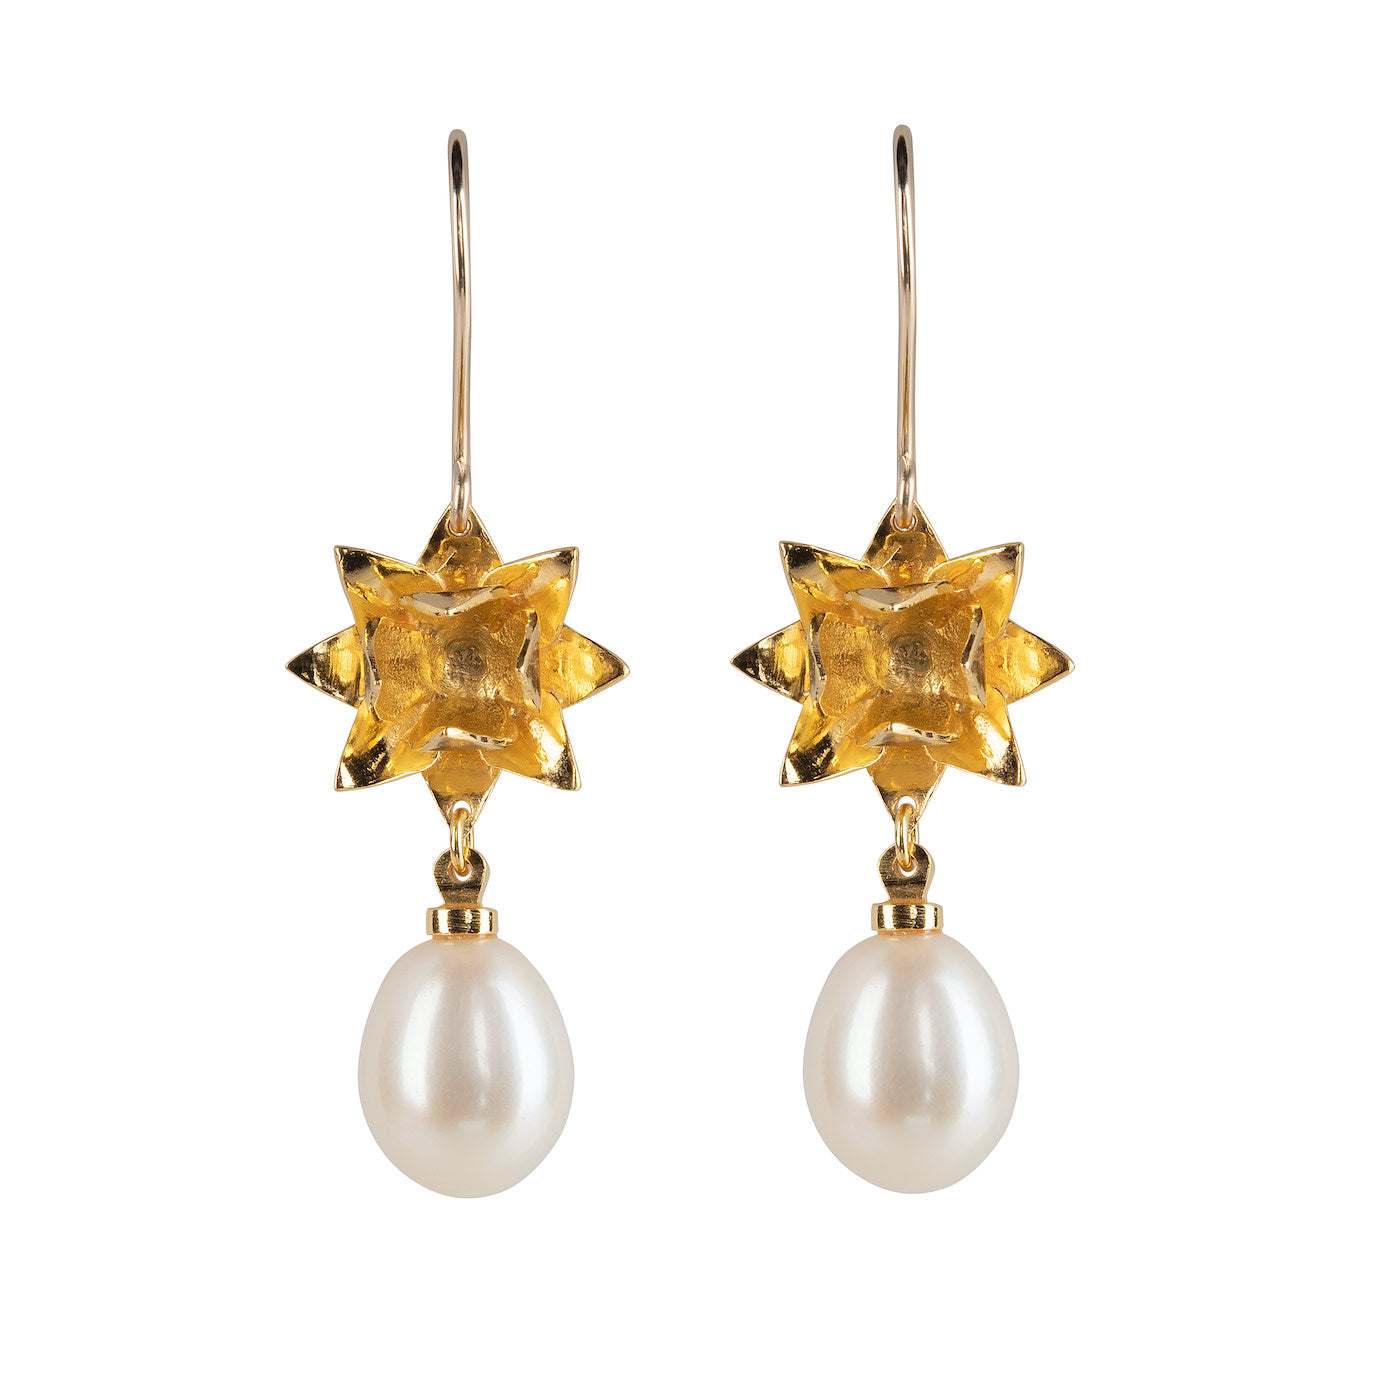 Side view of Lotus Pearl hook earrings in gold vermeil on white background